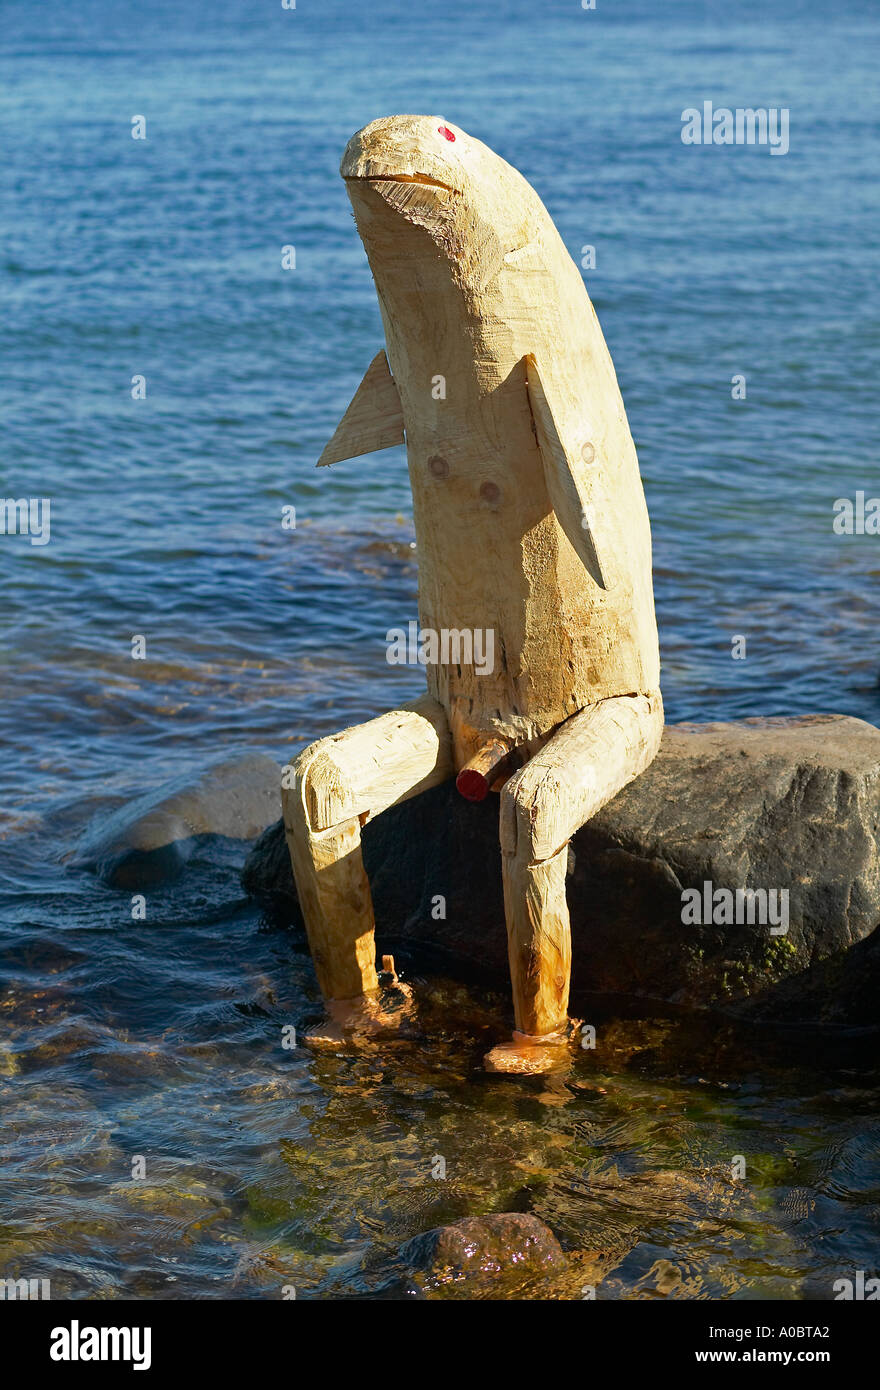 Funny wooden sculpture sitting on rock beside the little Mermaid statue, Copenhagen, Denmark, Europe Stock Photo